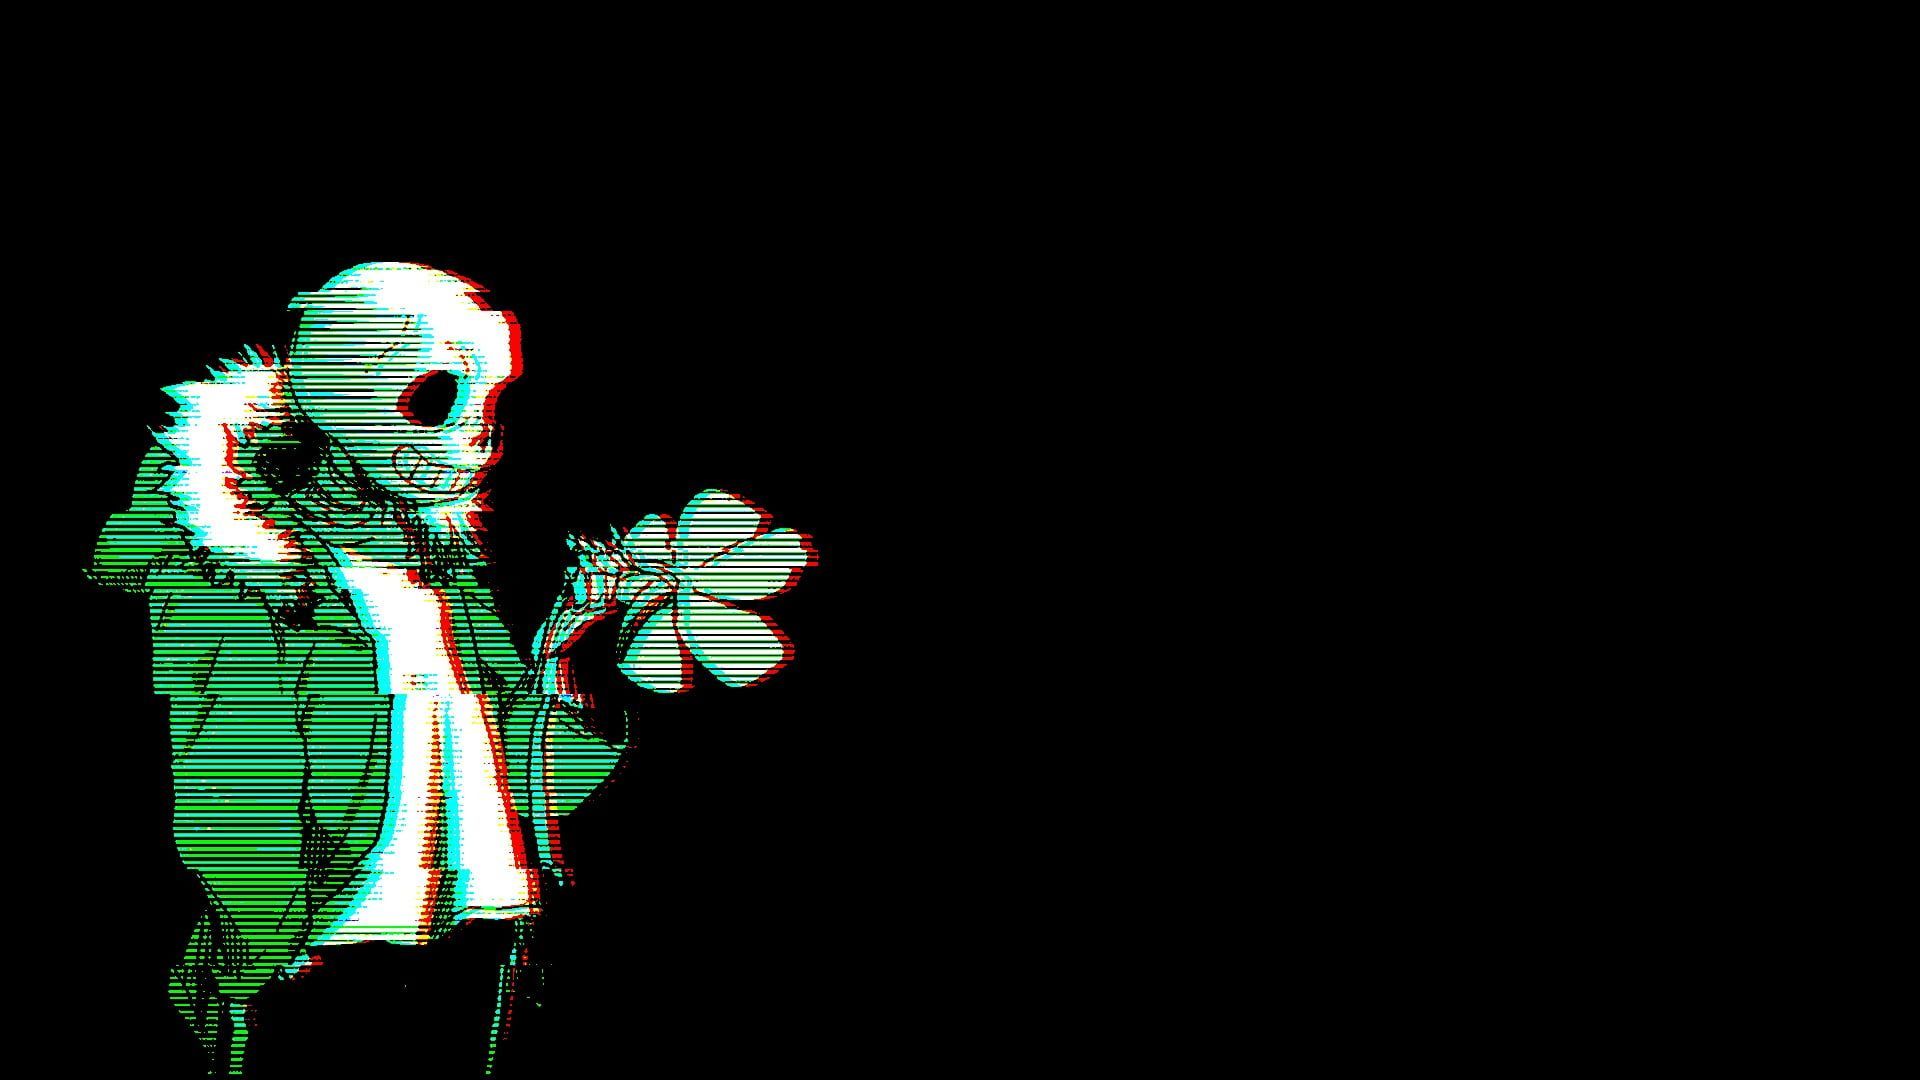 skeleton with green jacket wallpaper #Undertale #Sans chromatic aberration glitch art simple background #hoods #skeleton P. Glitch art, Undertale, Wallpaper